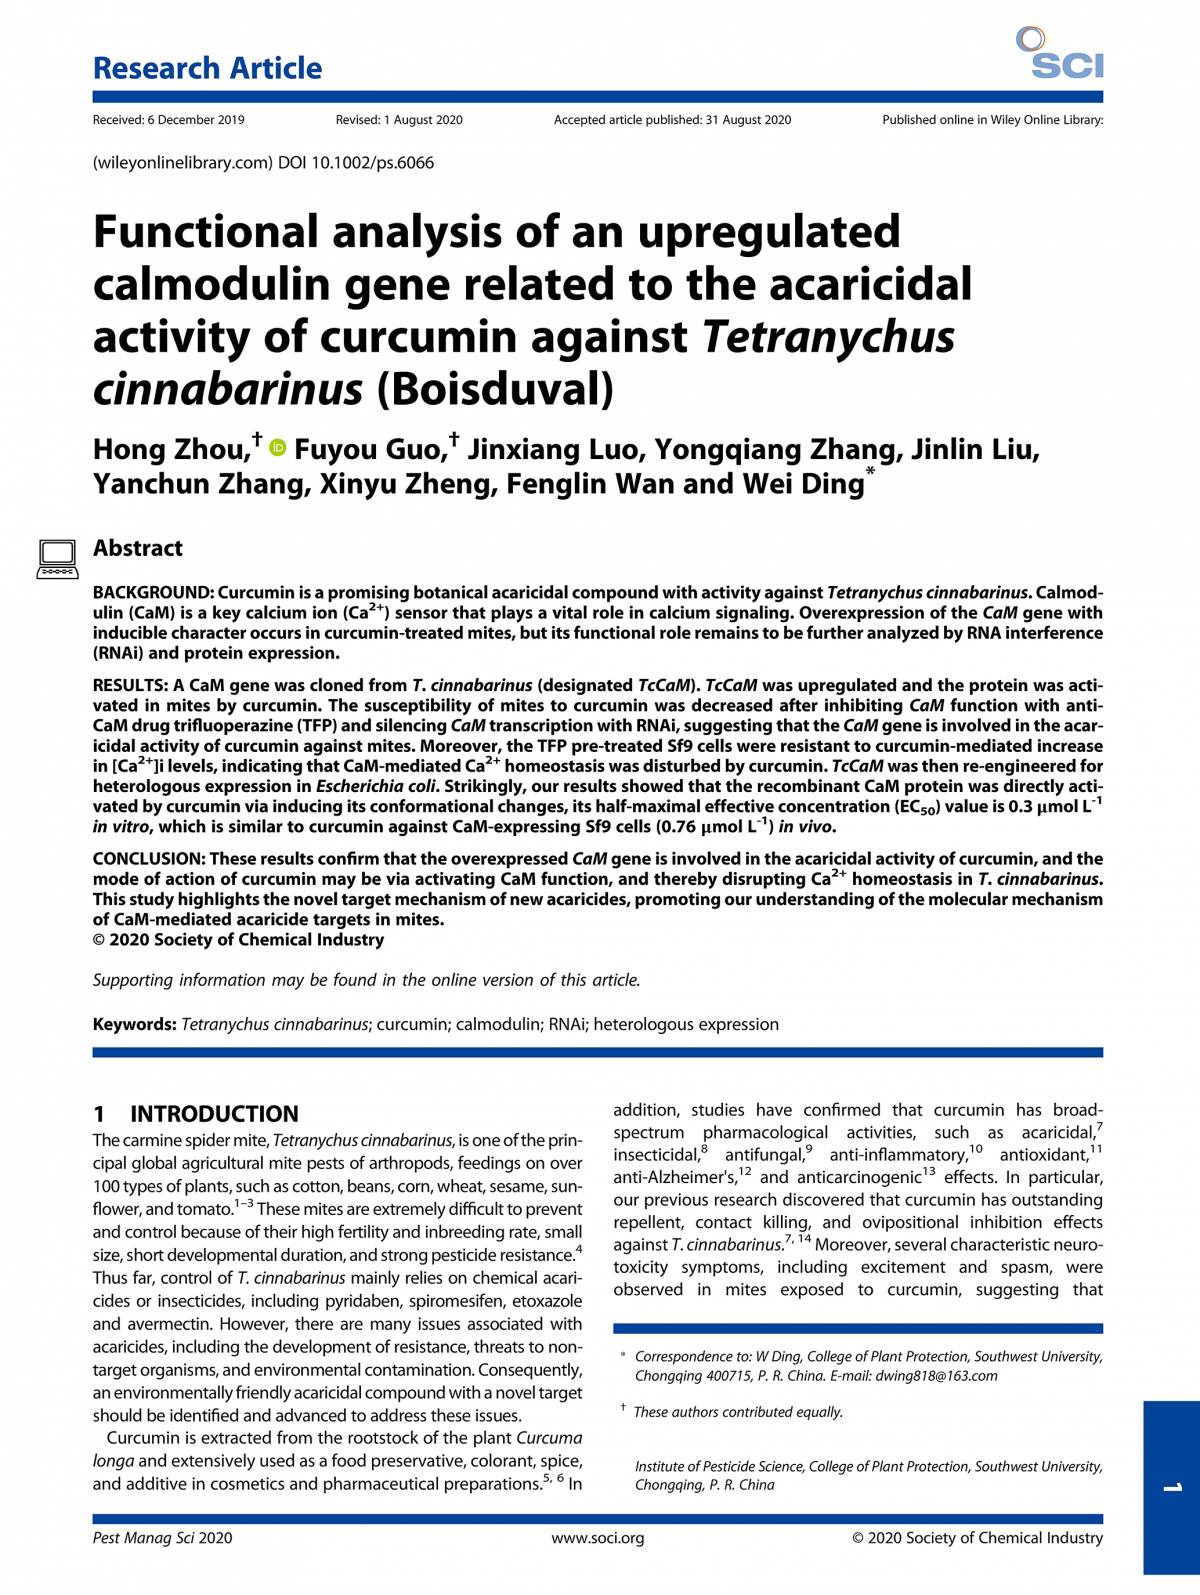 Functional analysis of an upregulated calmodulin gene related to the acaricidal activity of curcumin against Tetranychus cinnabarinus (Boisduval)